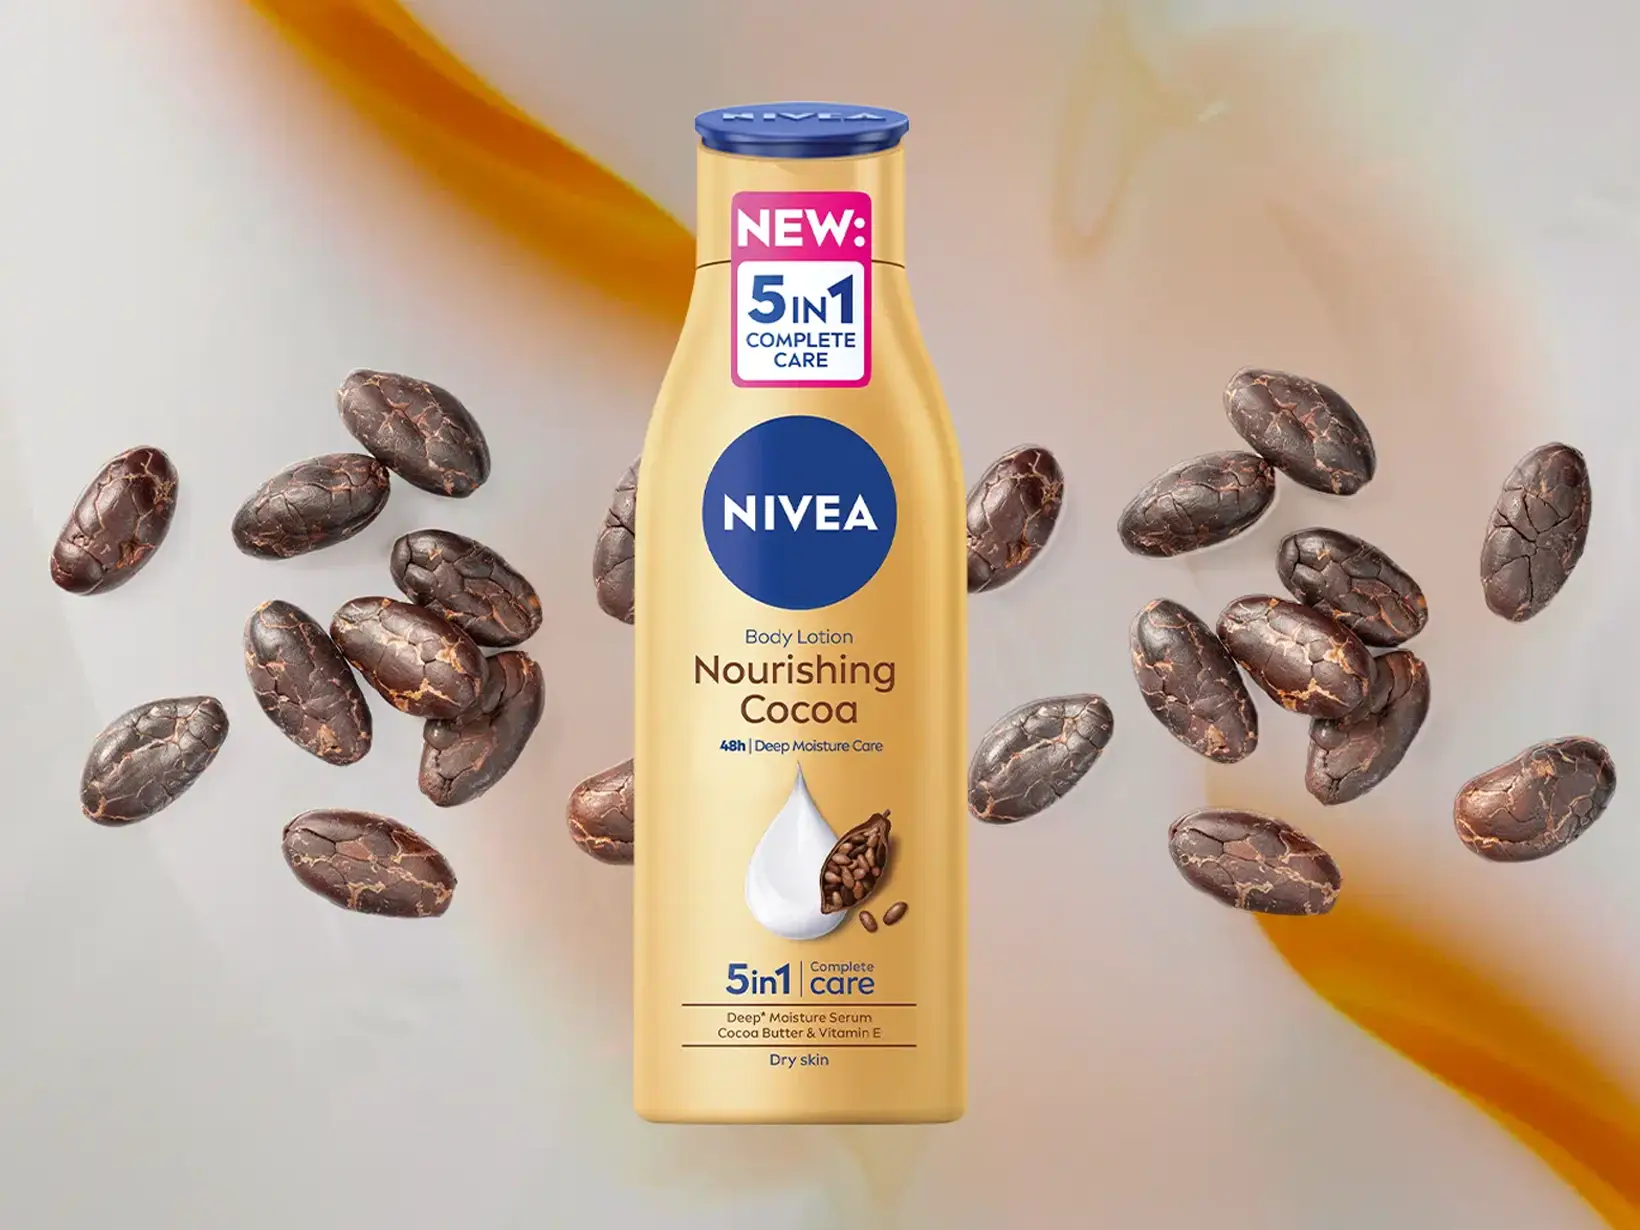 NIVEA 5in1 Nourishing Cocoa Product KV